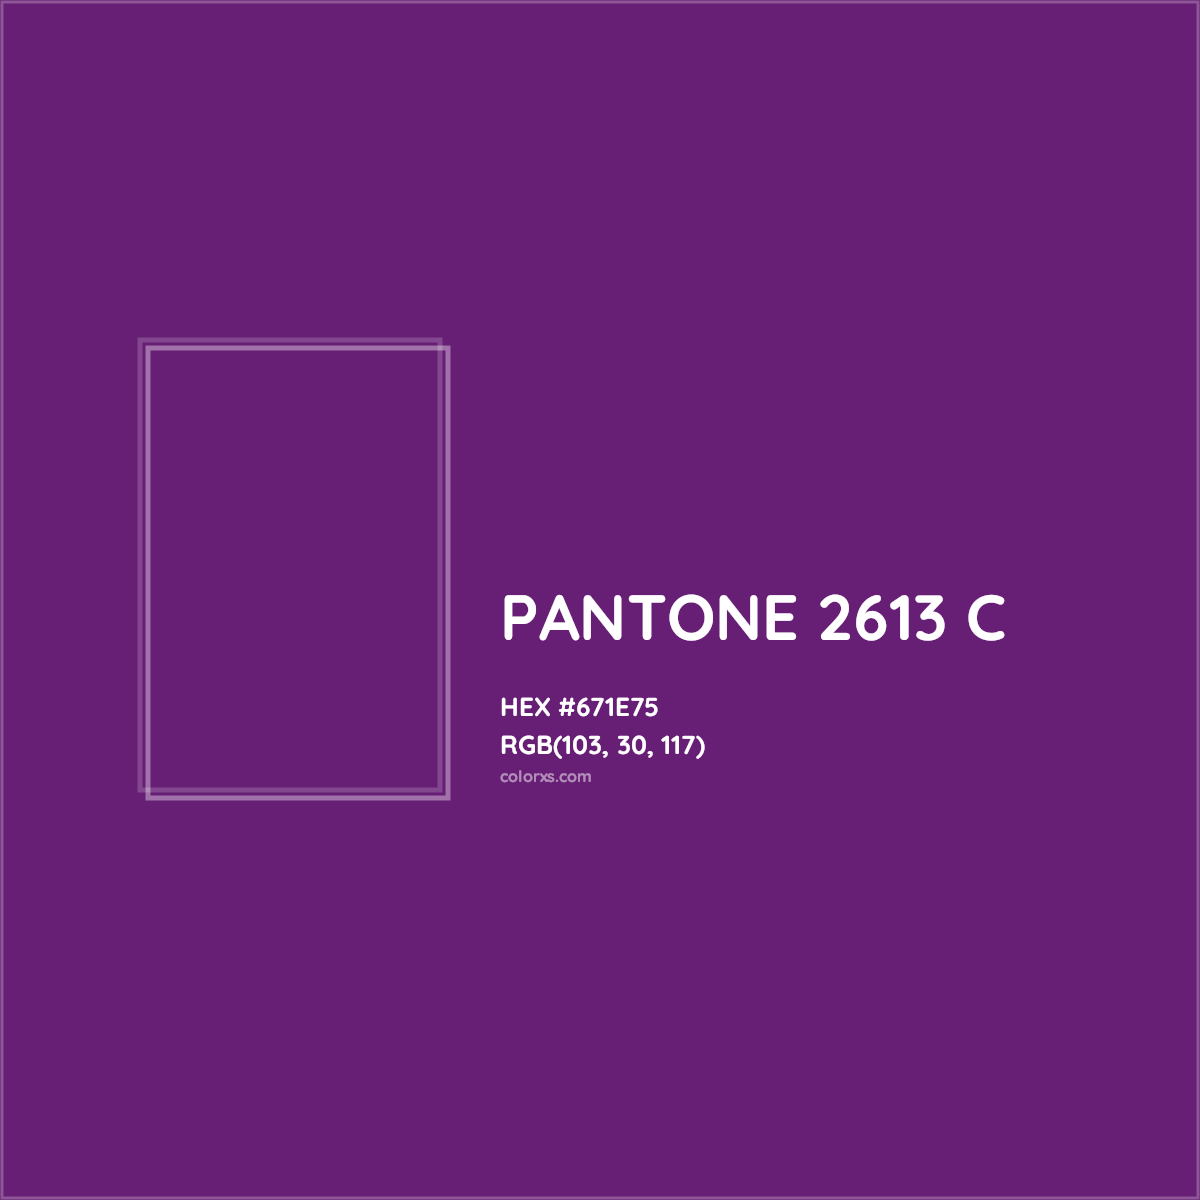 HEX #671E75 PANTONE 2613 C CMS Pantone PMS - Color Code